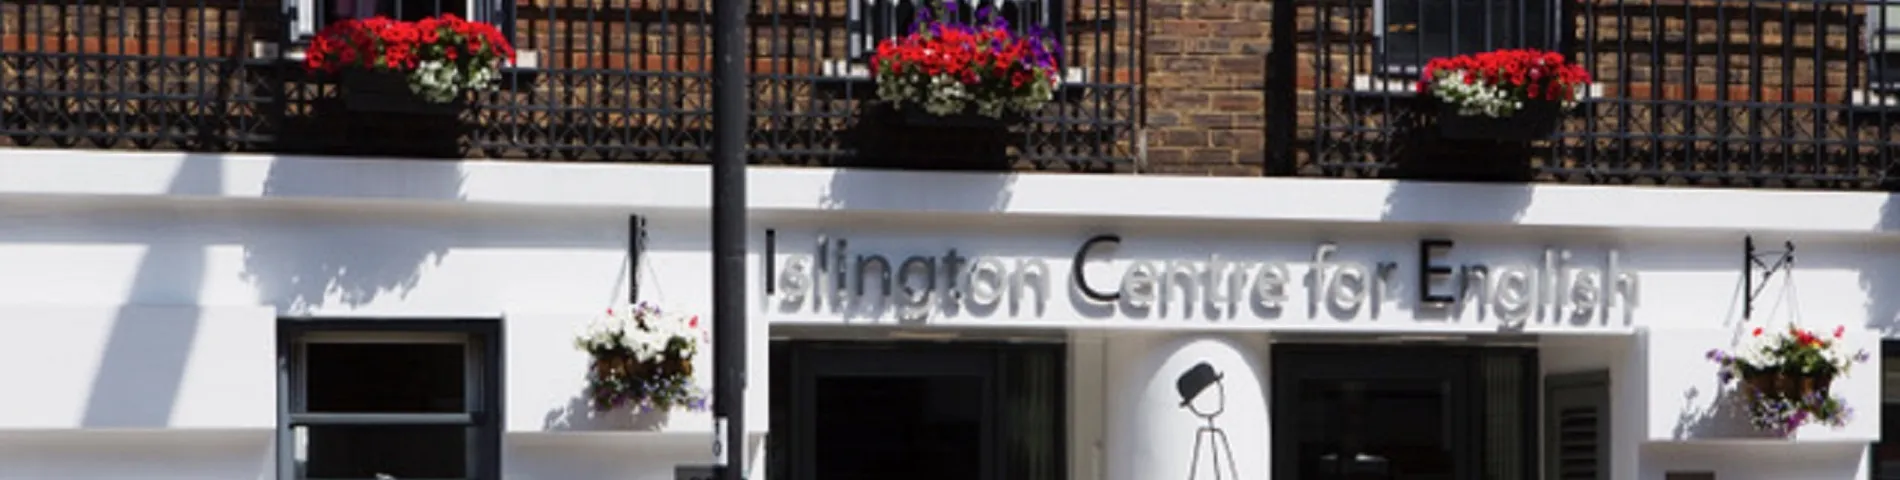 Islington Centre for English зображення 1